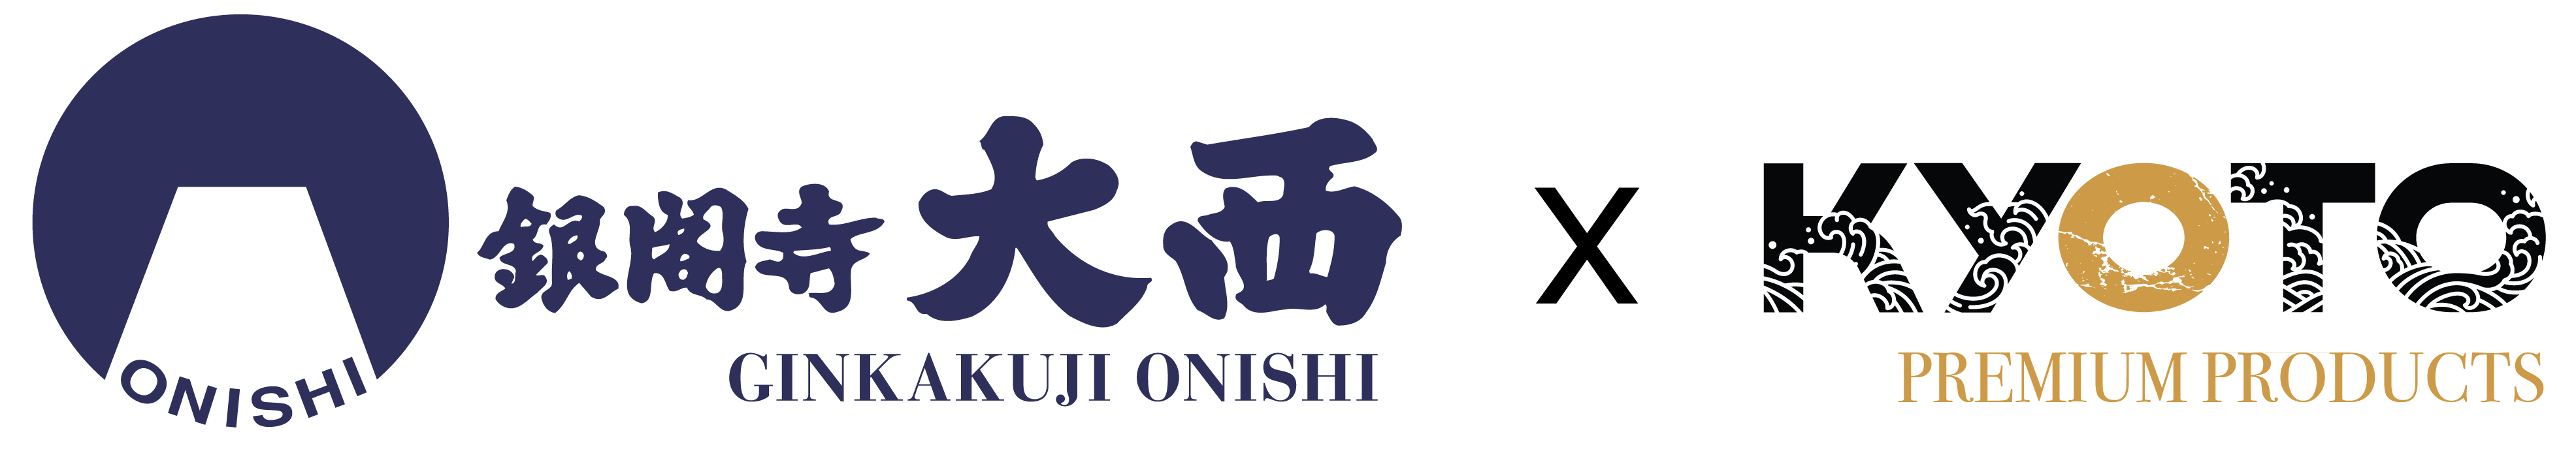 cropped-GINKAKUJI-X-KYOTO-logo-06-1.png